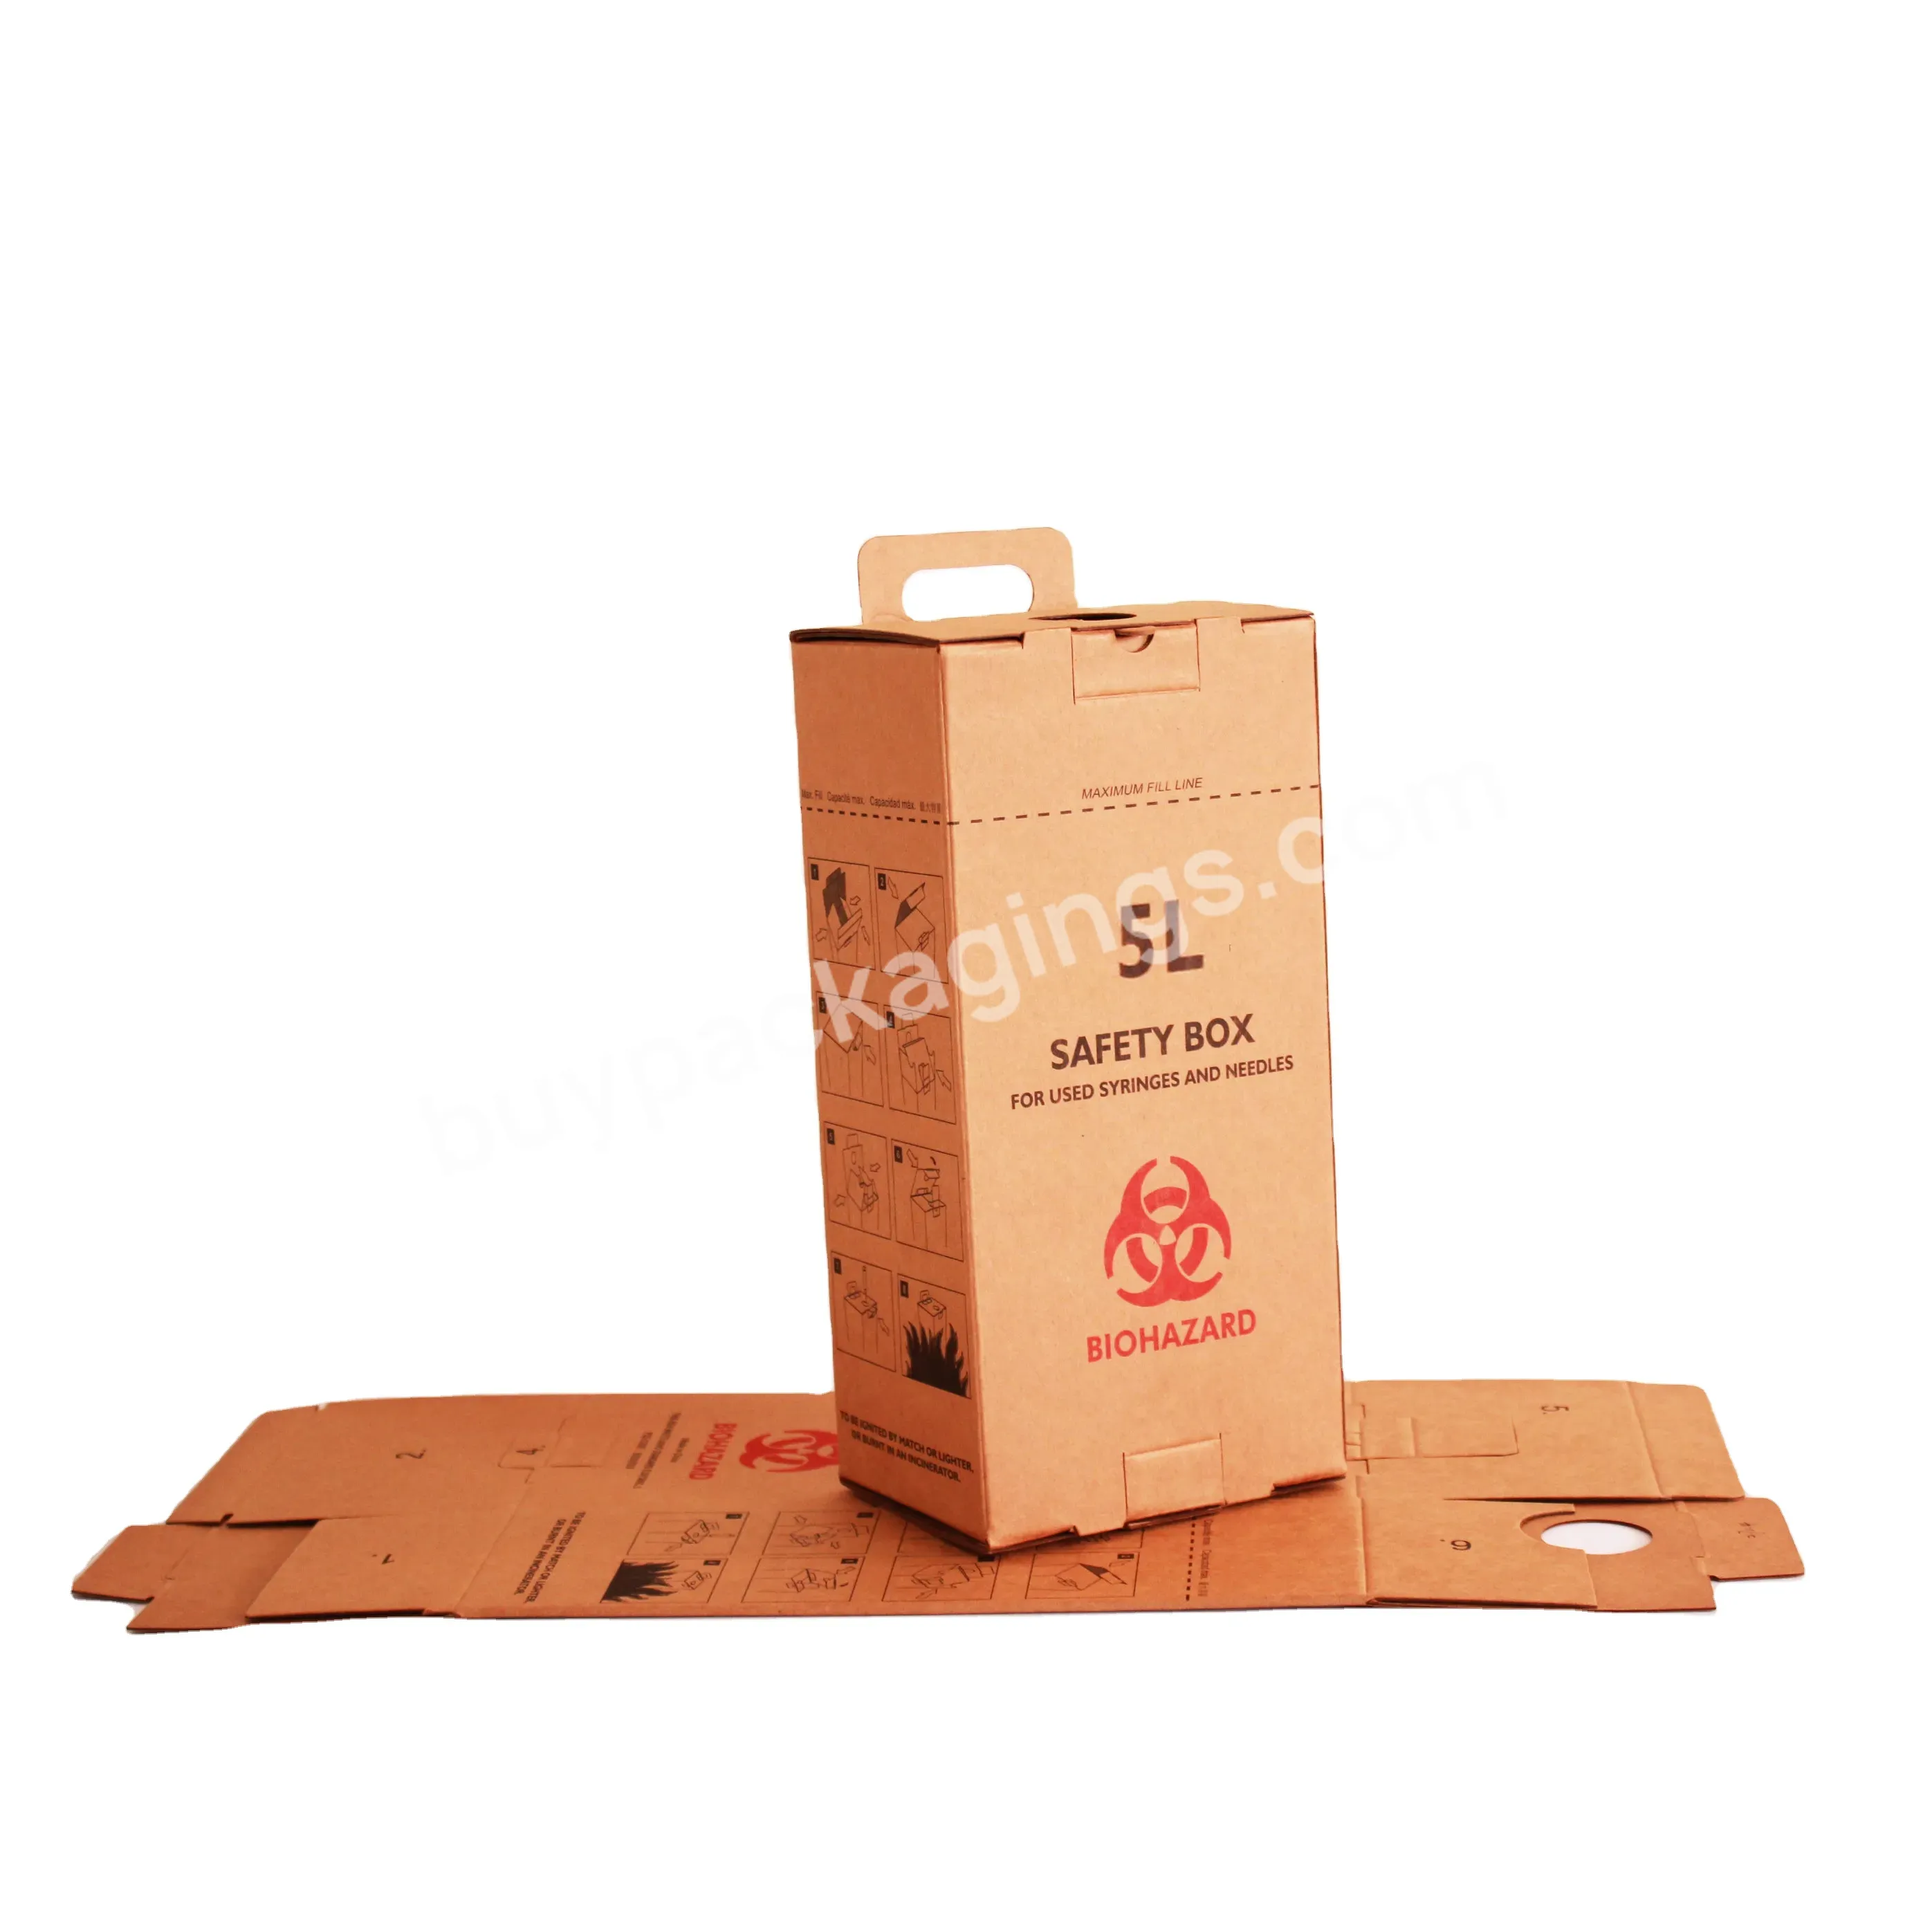 5l 7l 10 Liter Disposable Medical Safety Box Cardboard Sharp Container Medical Safety Box - Buy 5l Safety Box,5lsharp Box,Medical Safety Boxes.